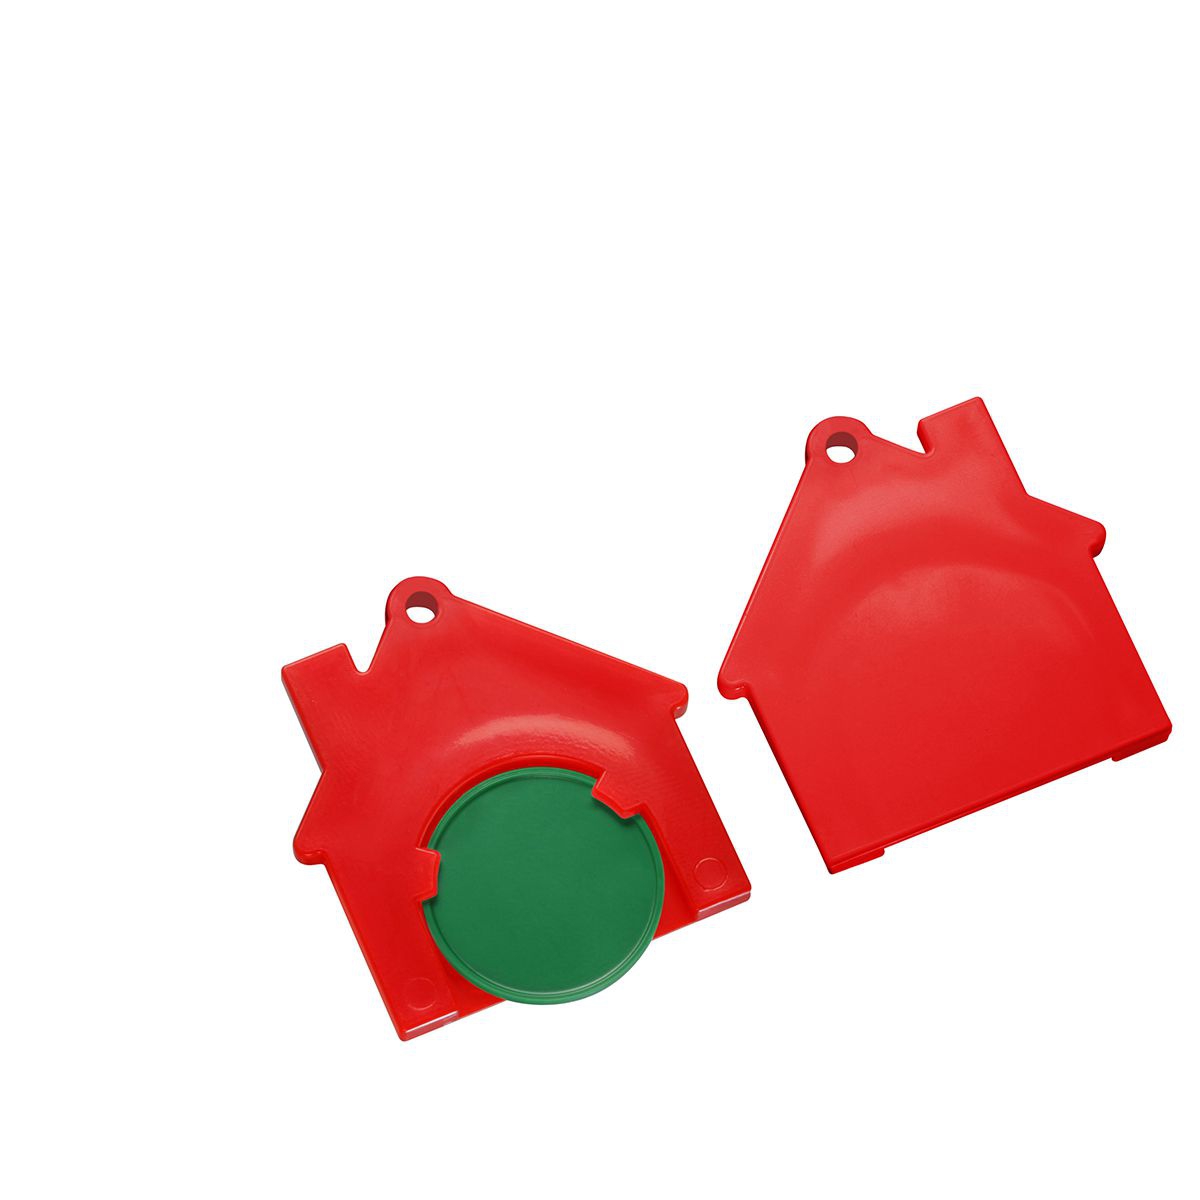 Chiphalter mit 1€-Chip "Haus", grün, rot